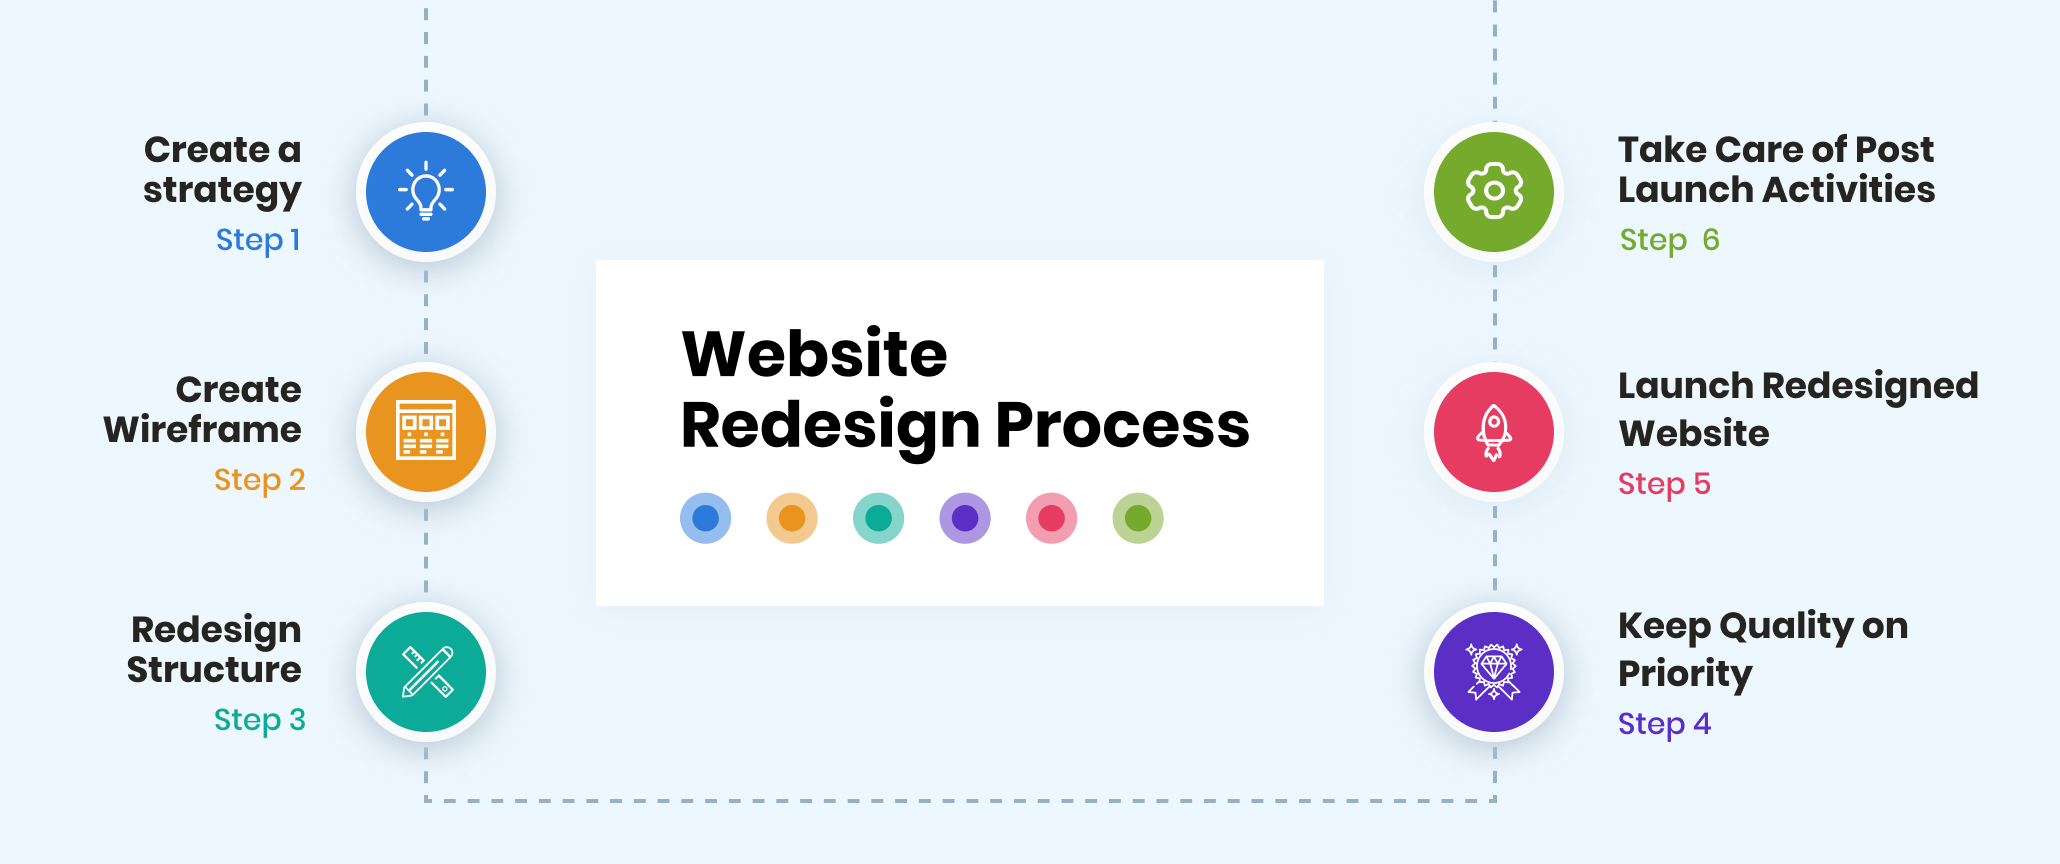 Key Steps to Redesign a Website